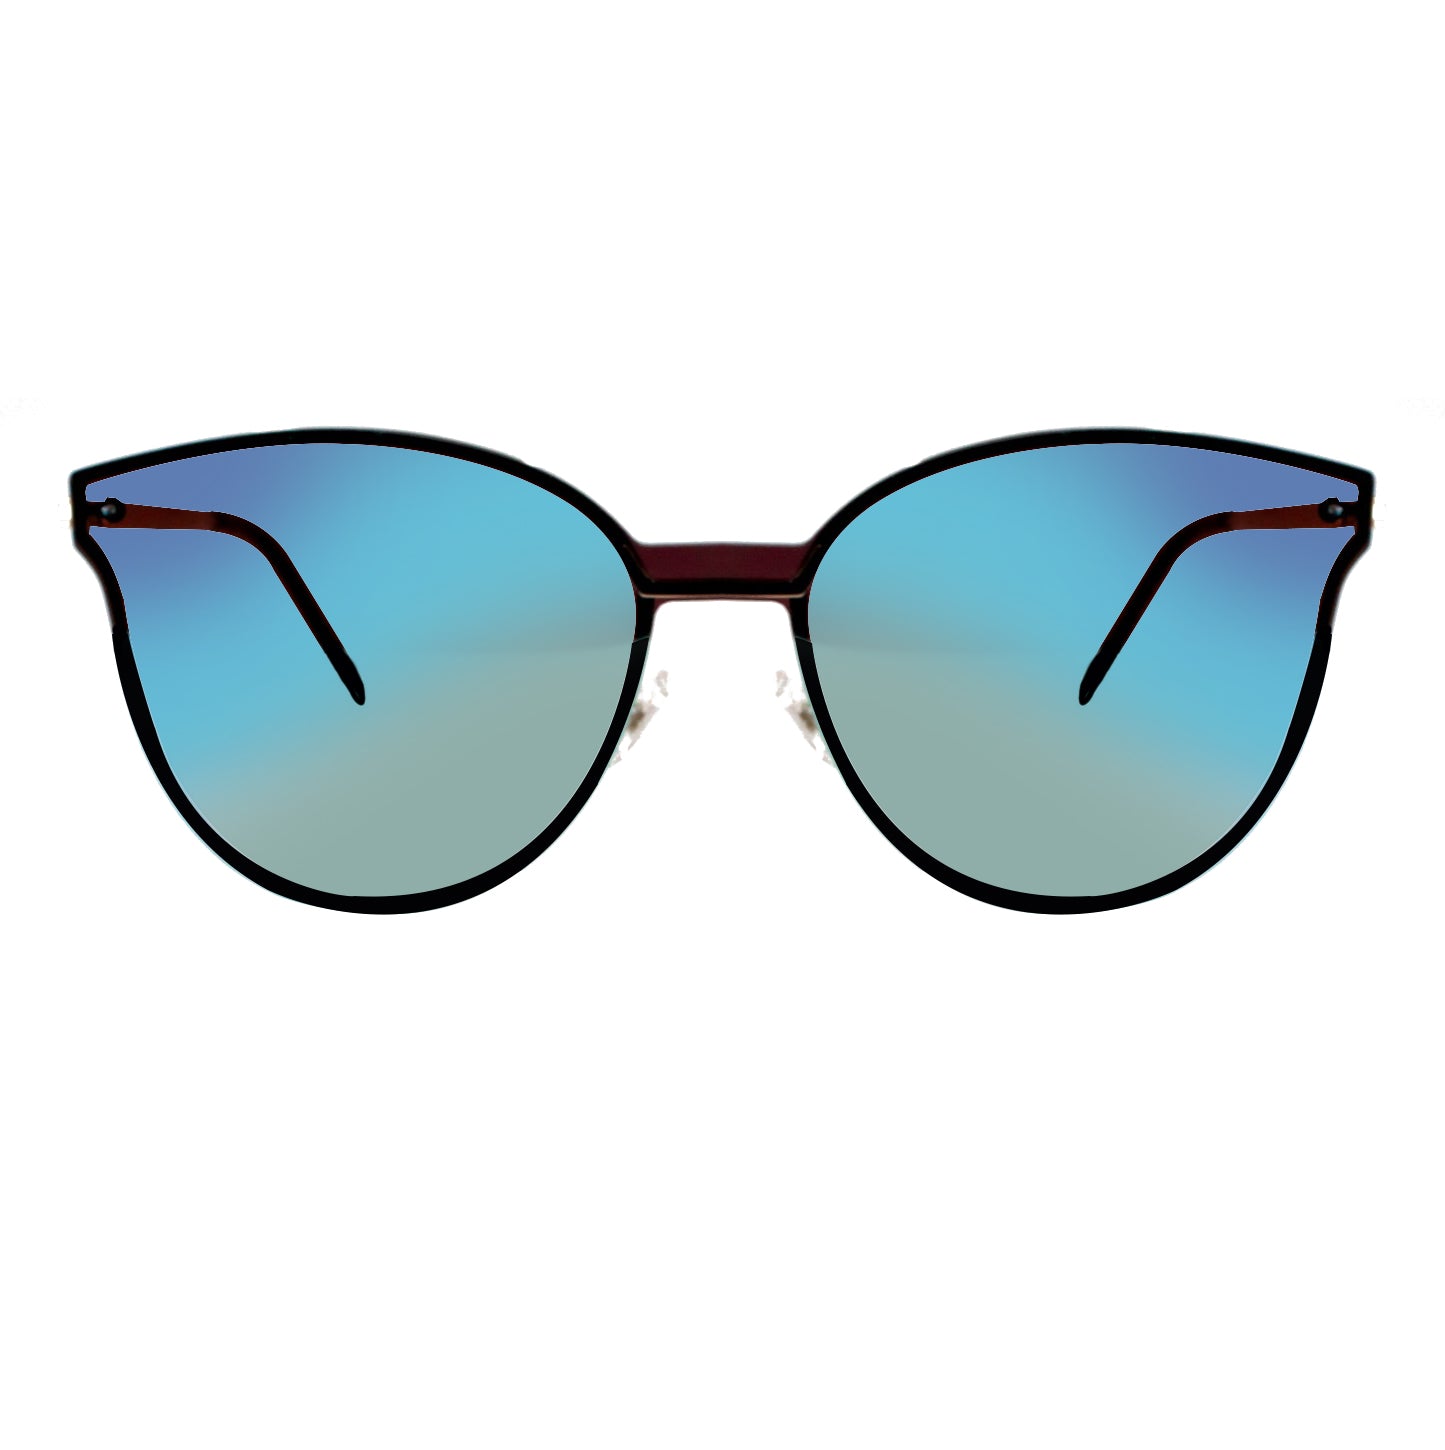 Shades X - UV Protection Sunglasses | Model 1812